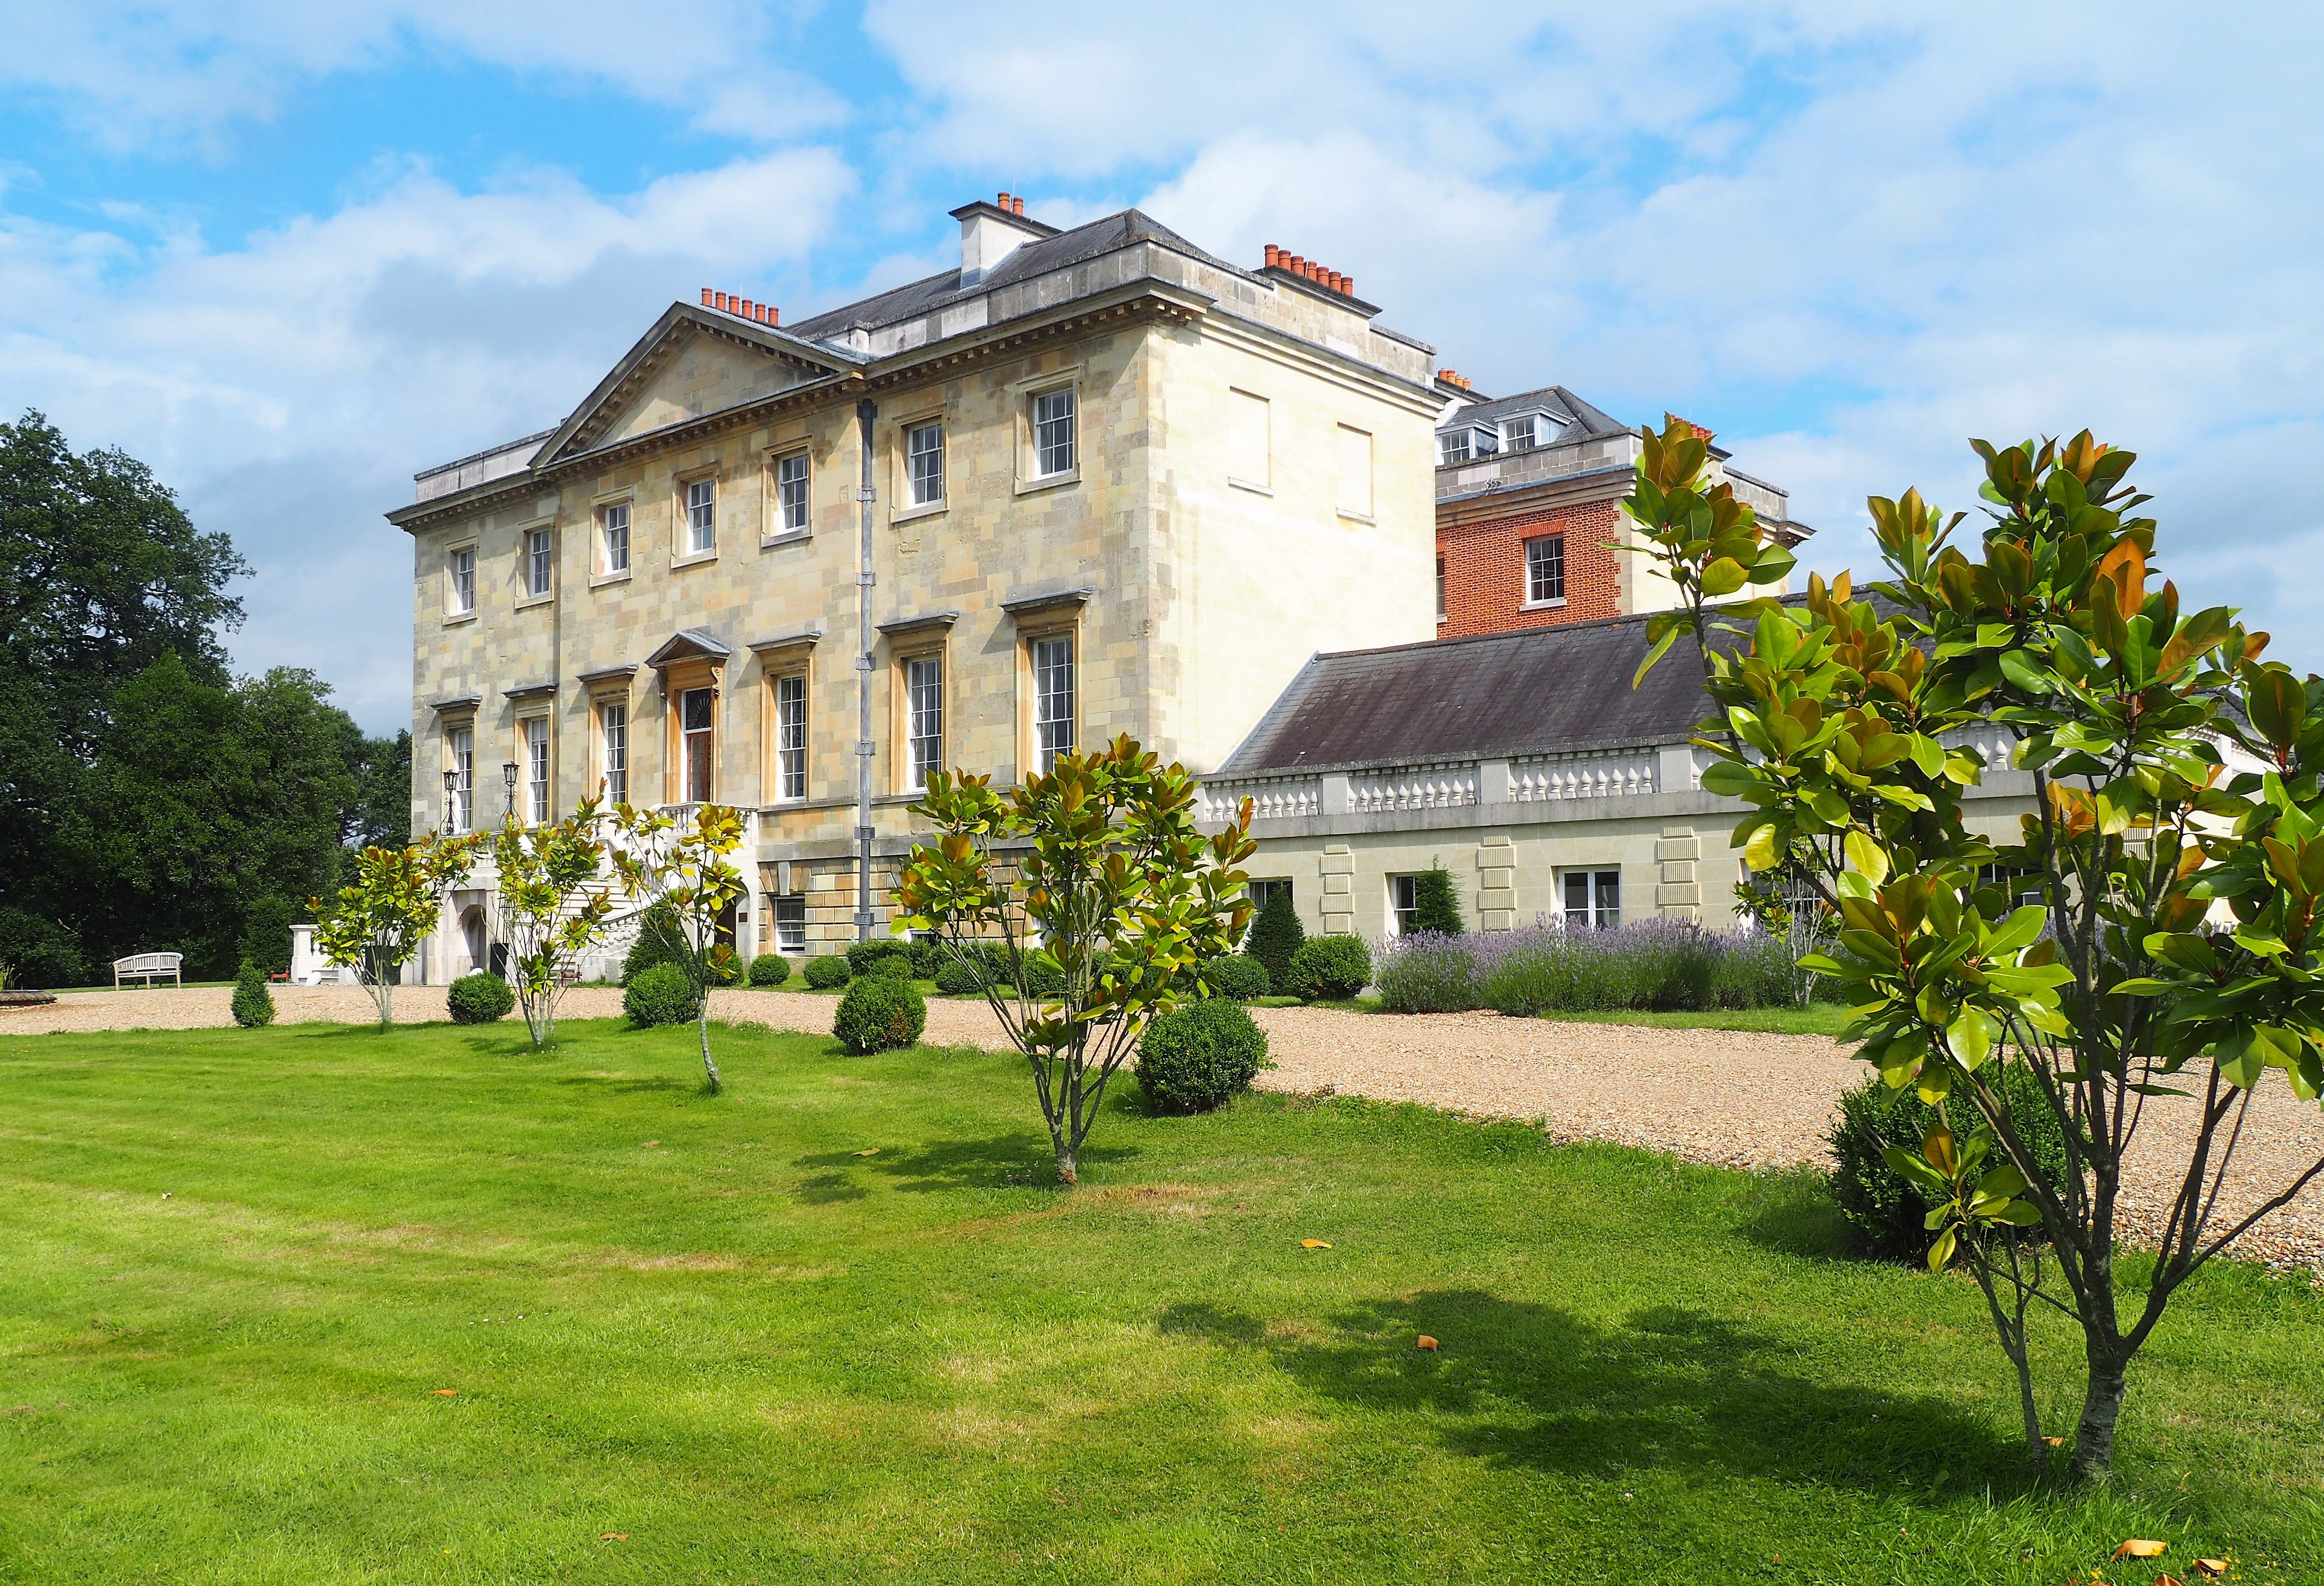 Photograph of Botleys Mansion at Homewood Park